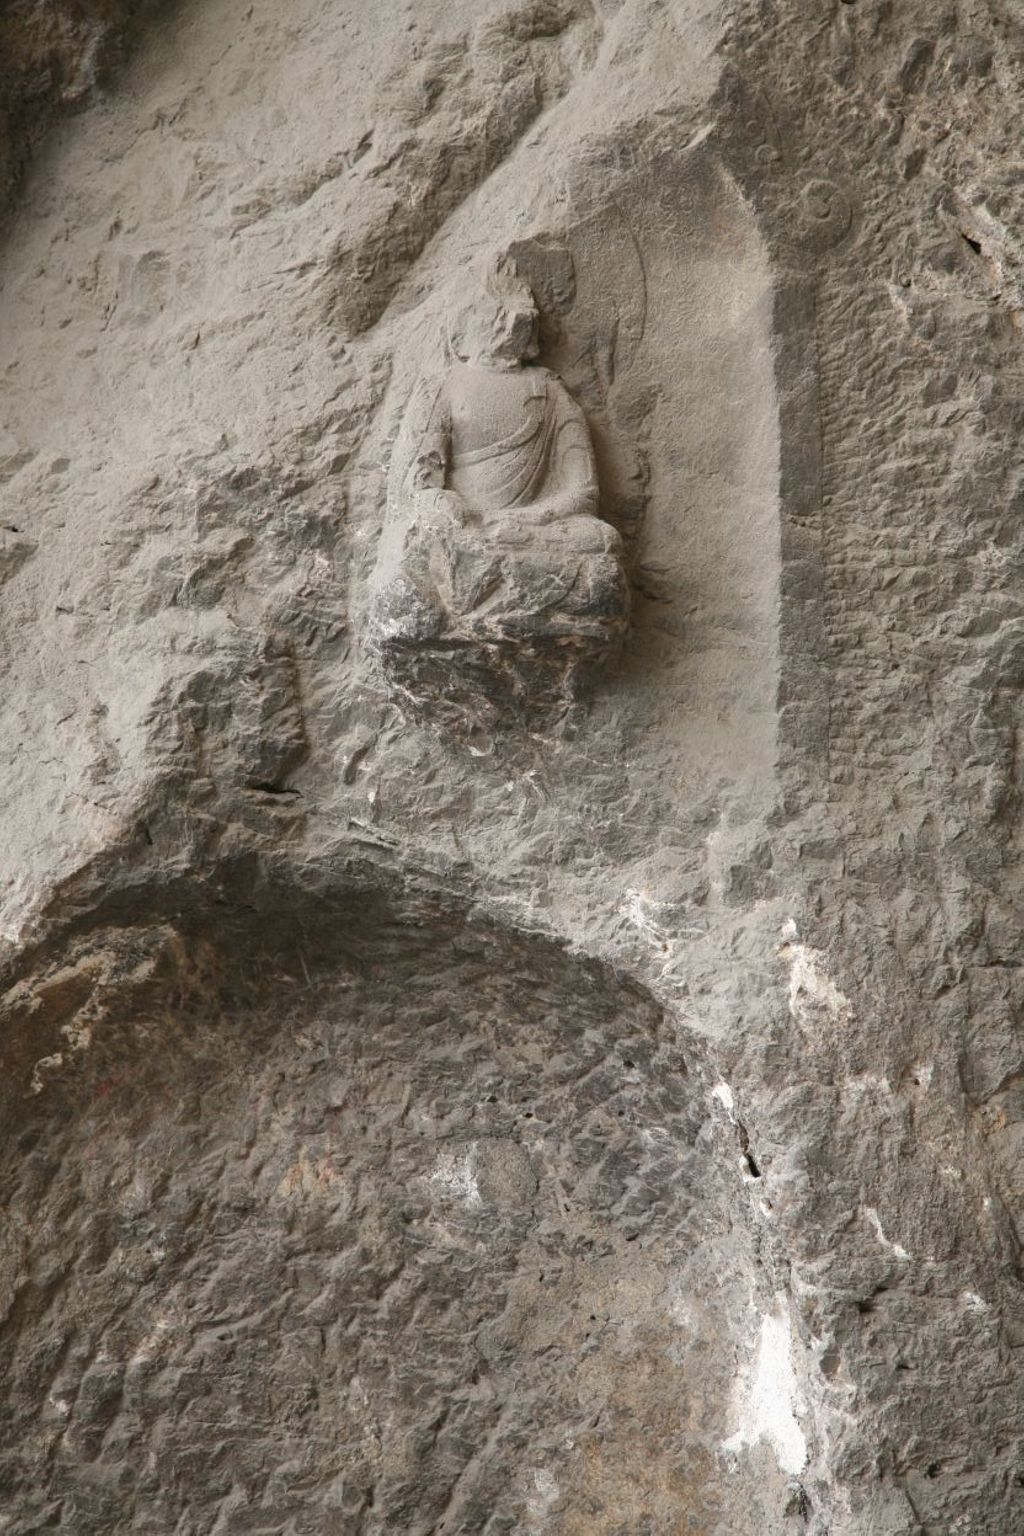 Miniature of Southern Xiangtangshan, Cave 2, exterior